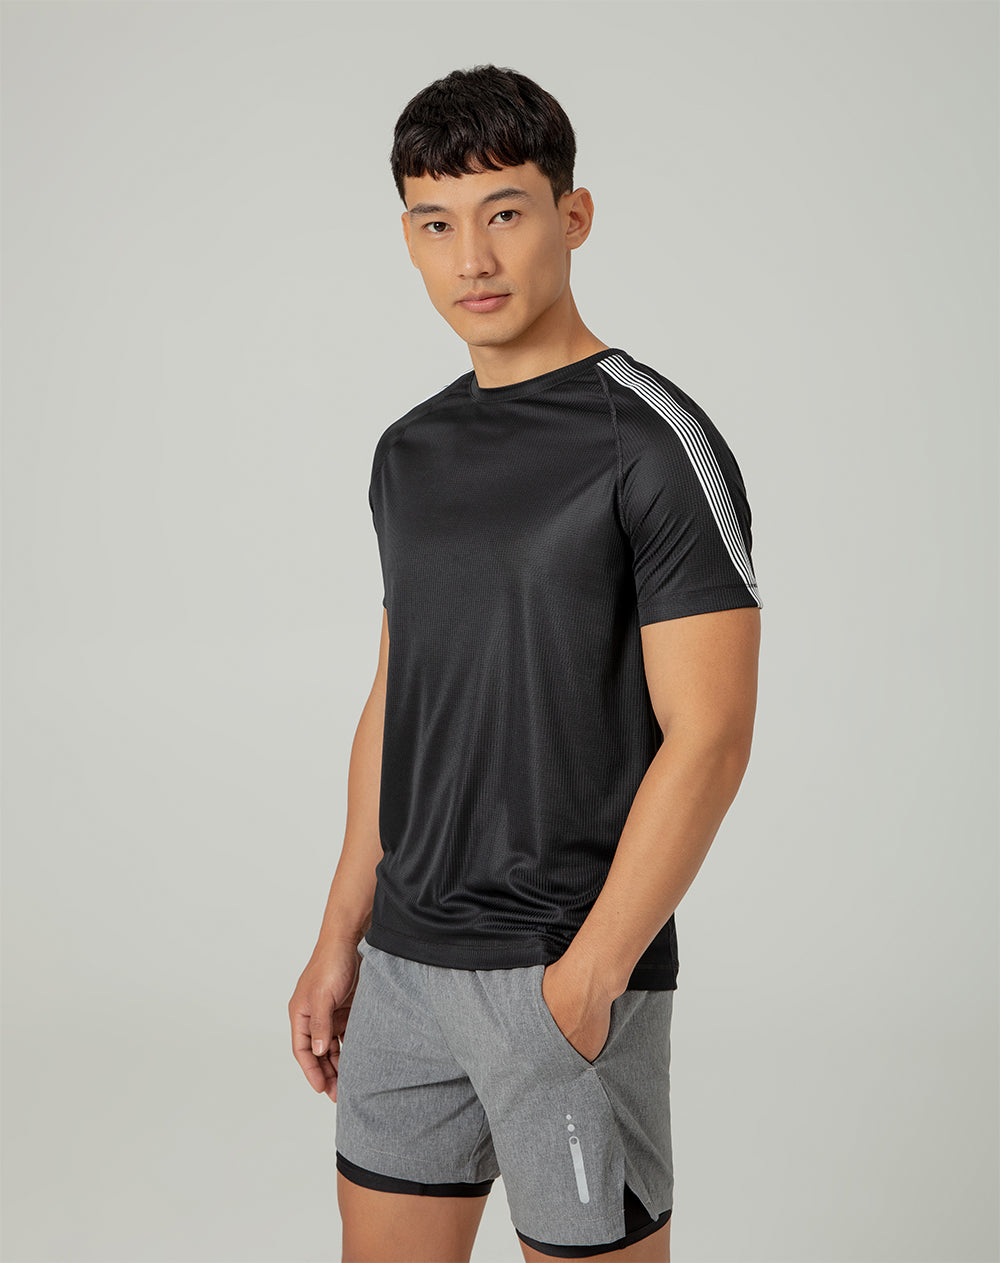 Camiseta fetre regular fit manga corta negra